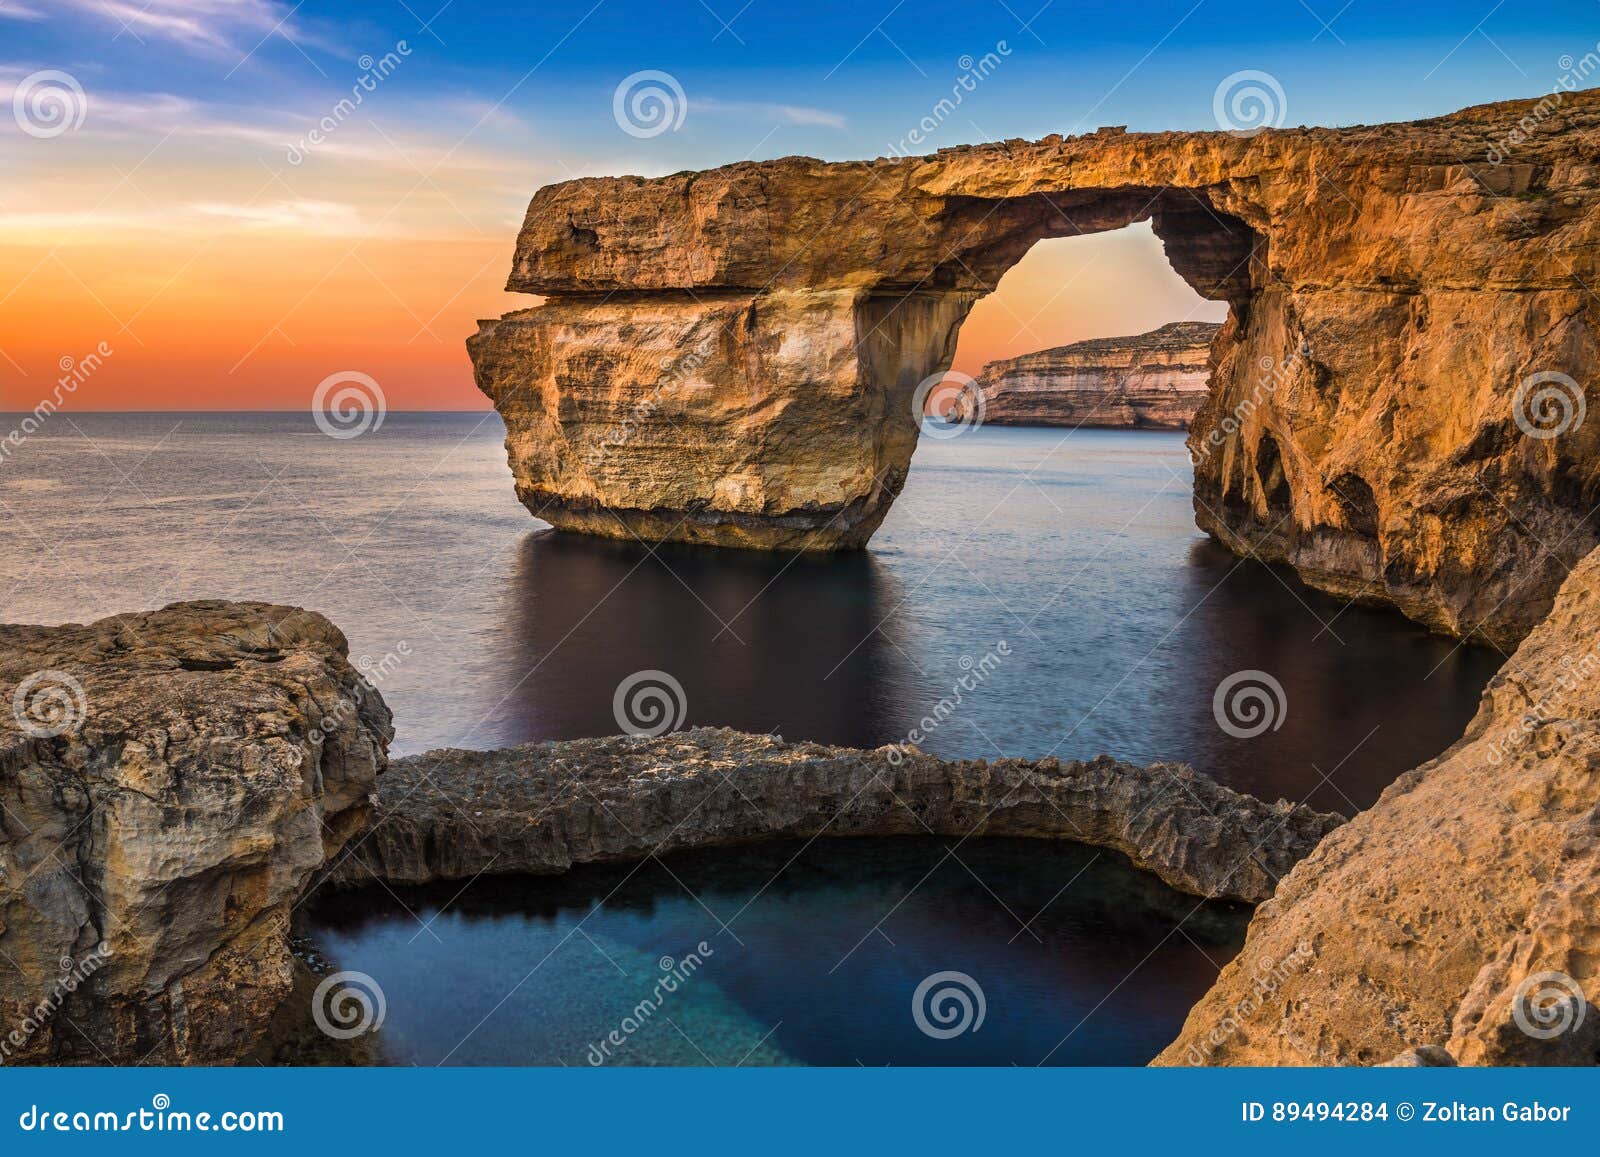 gozo, malta - the beautiful azure window, a natural arch